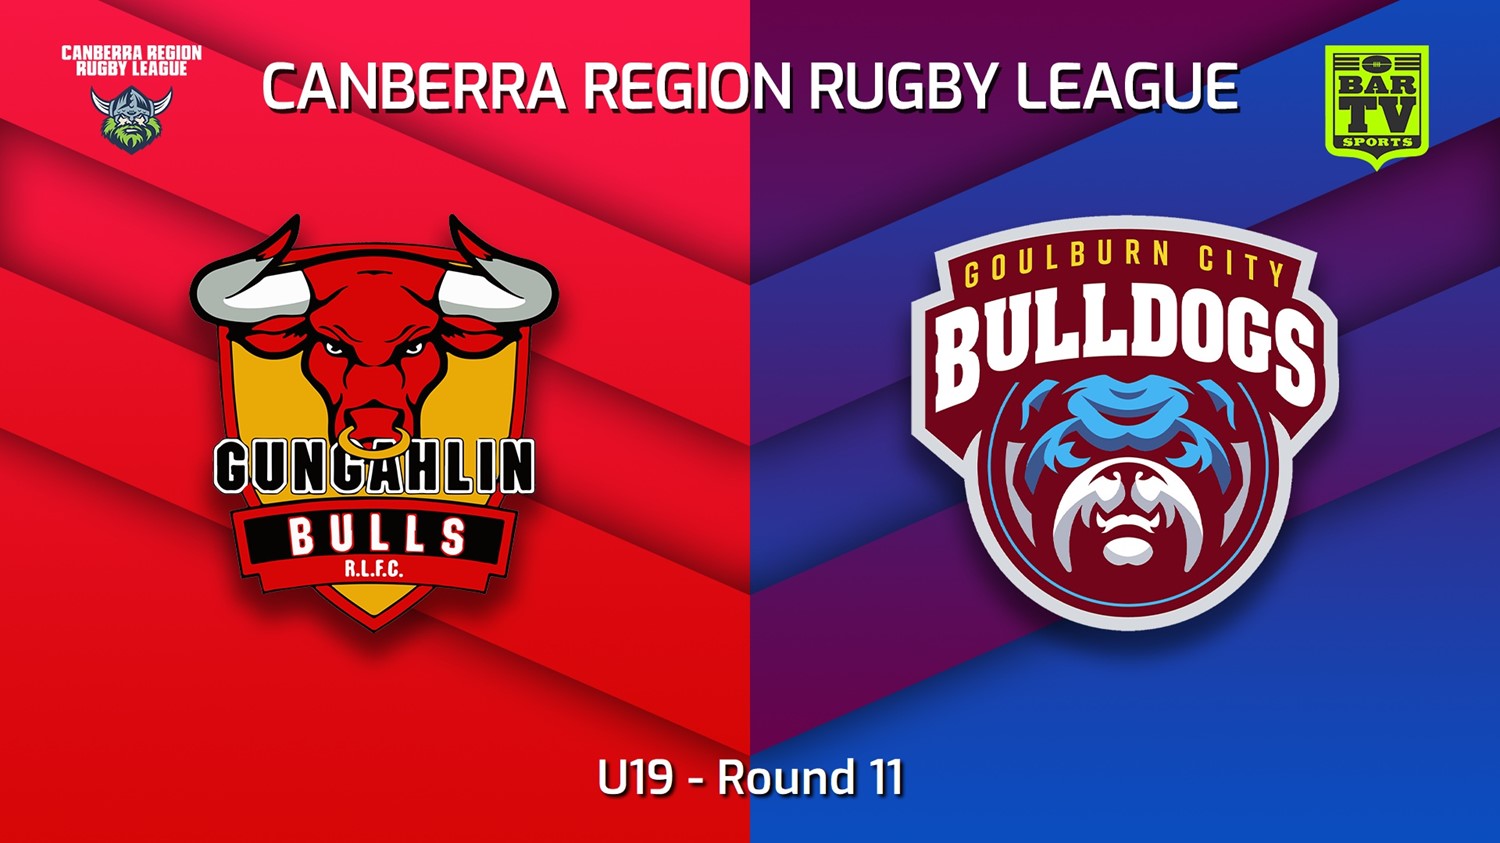 220702-Canberra Round 8 - U19 - Gungahlin Bulls v Goulburn City Bulldogs Slate Image